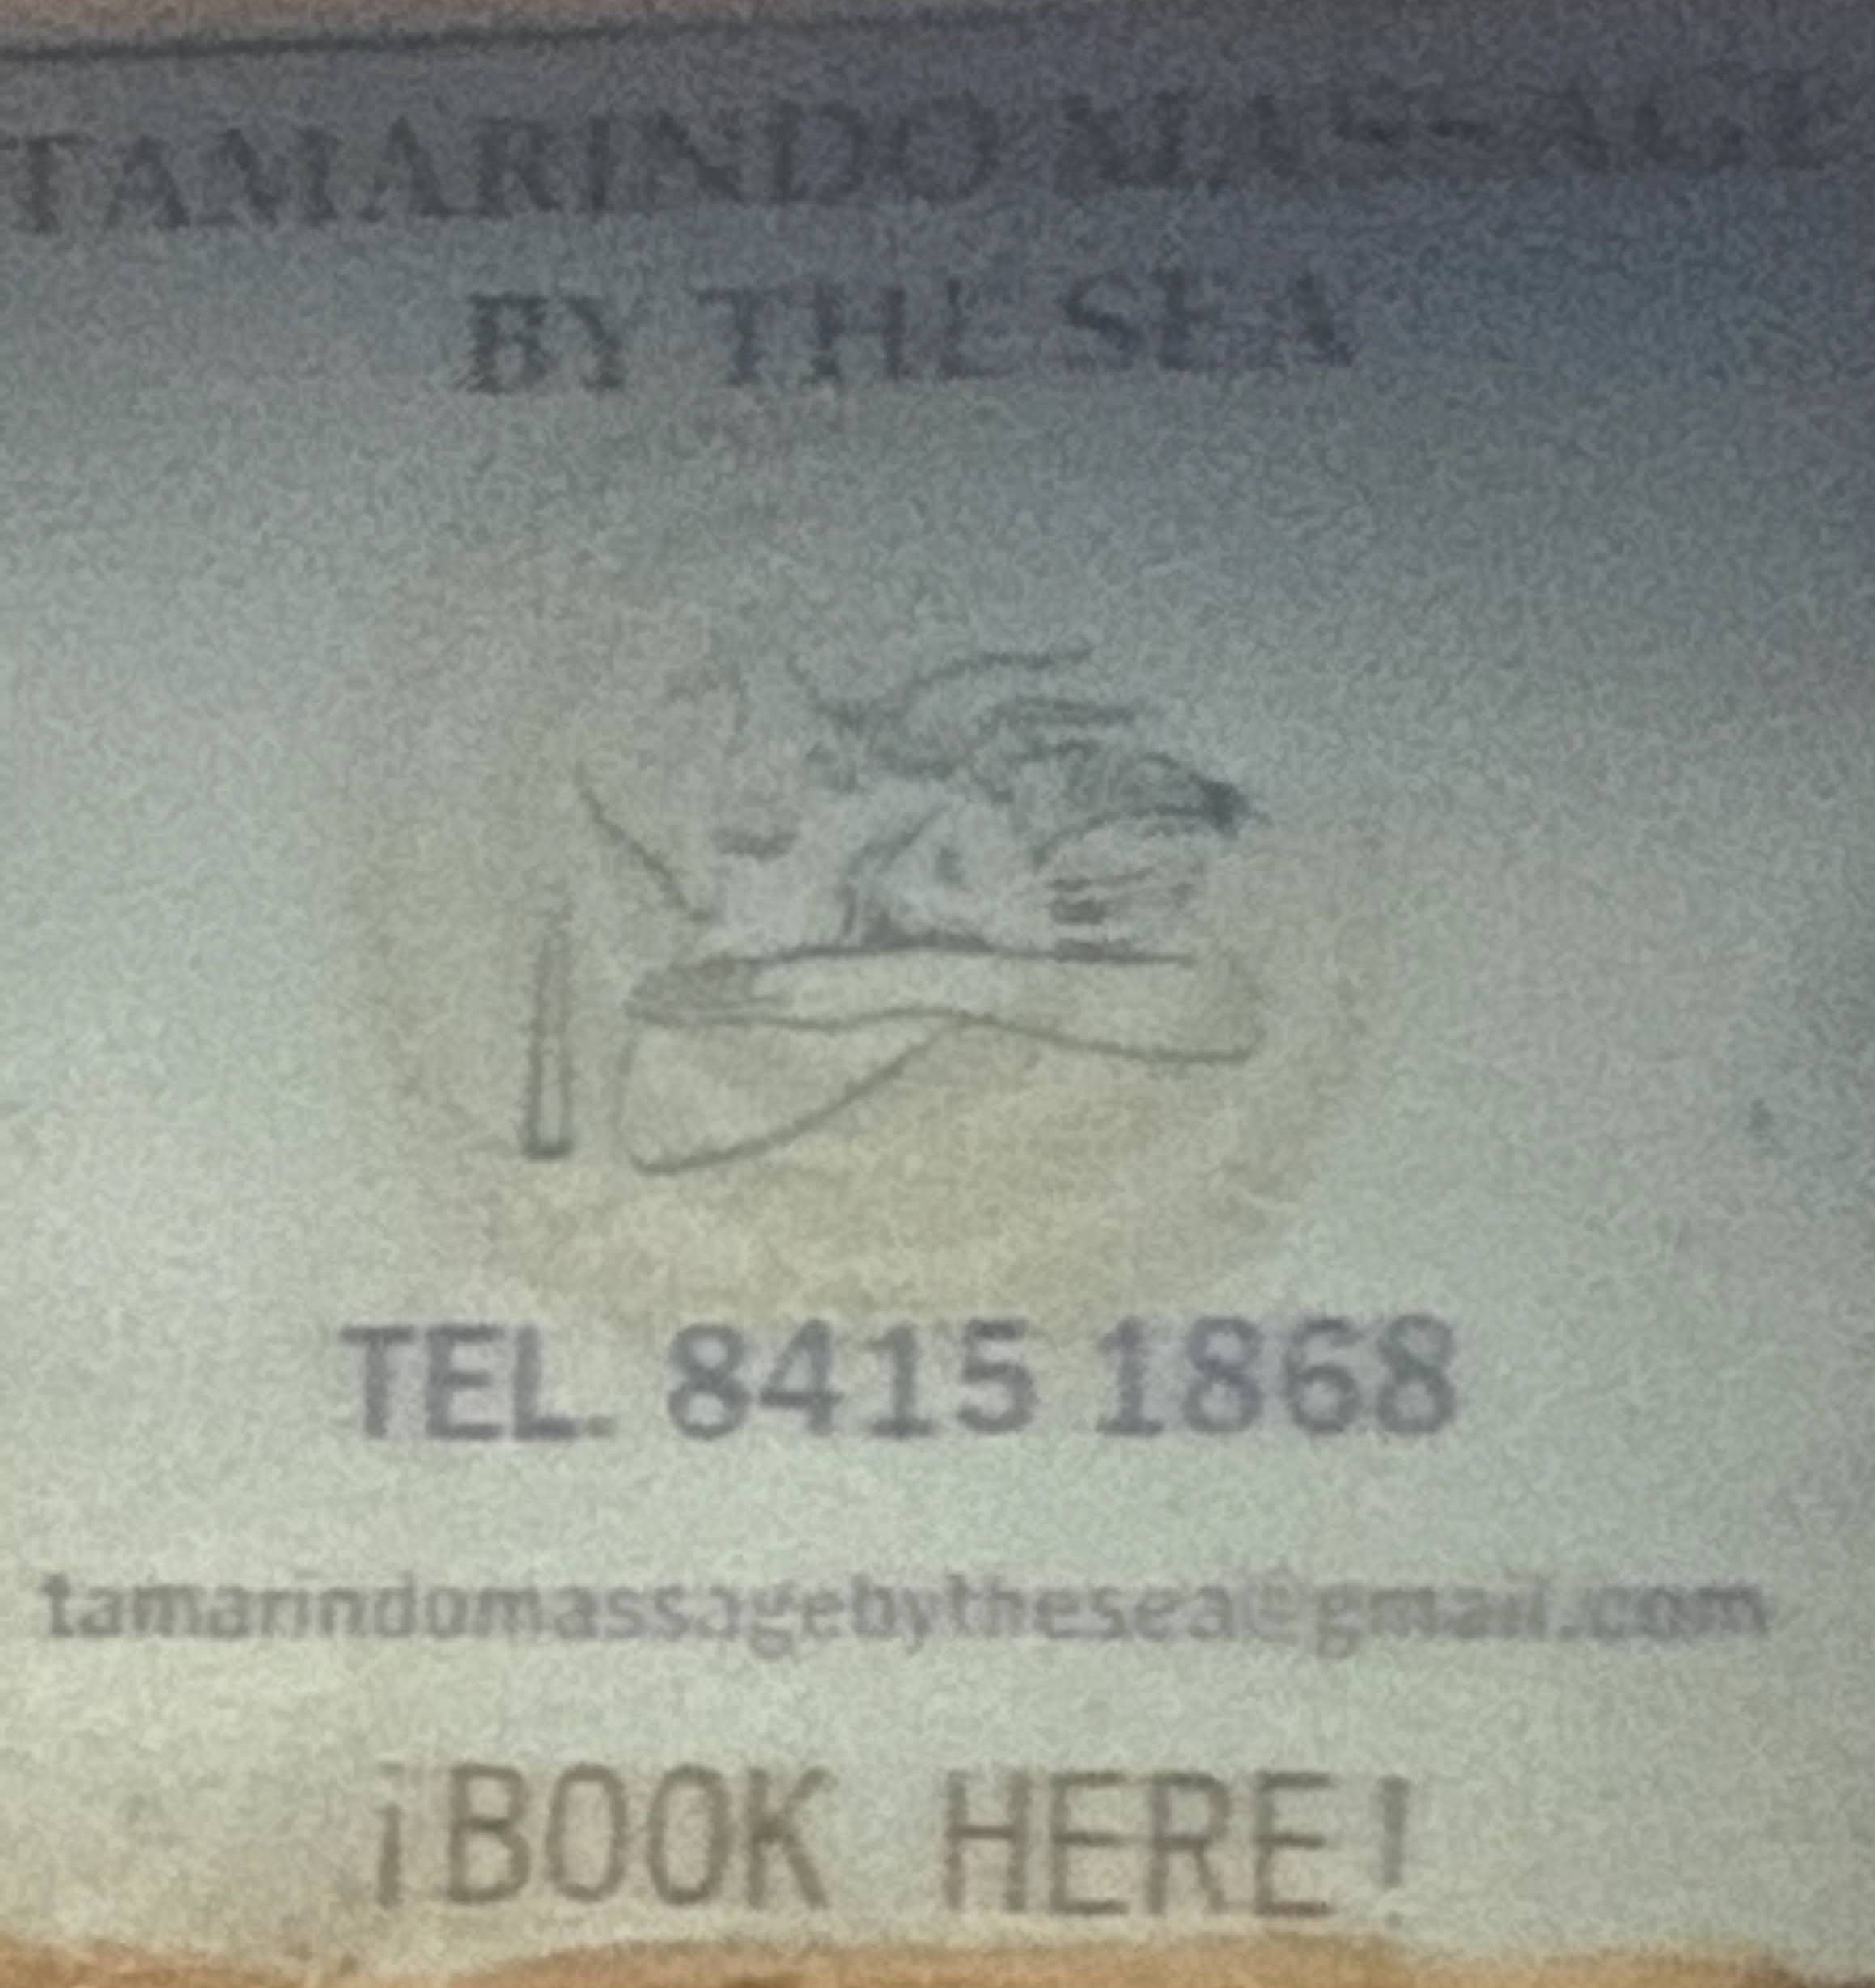 Tamarindo Massage by the Sea Sign